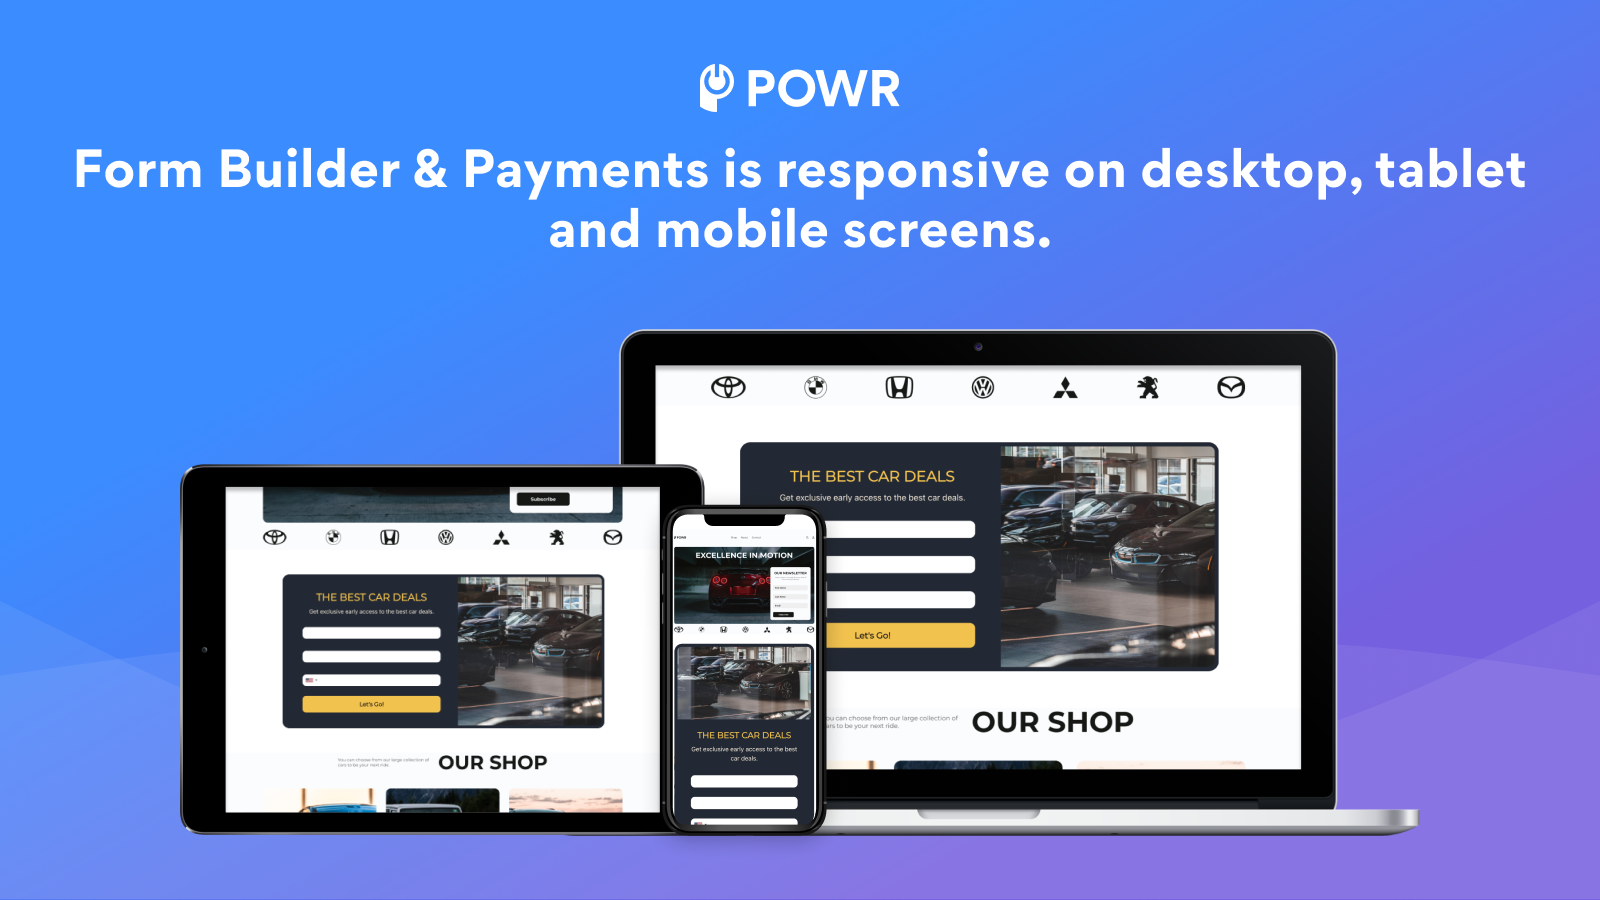 Form Builder & Payments is responsive on desktop, tablet, etc.